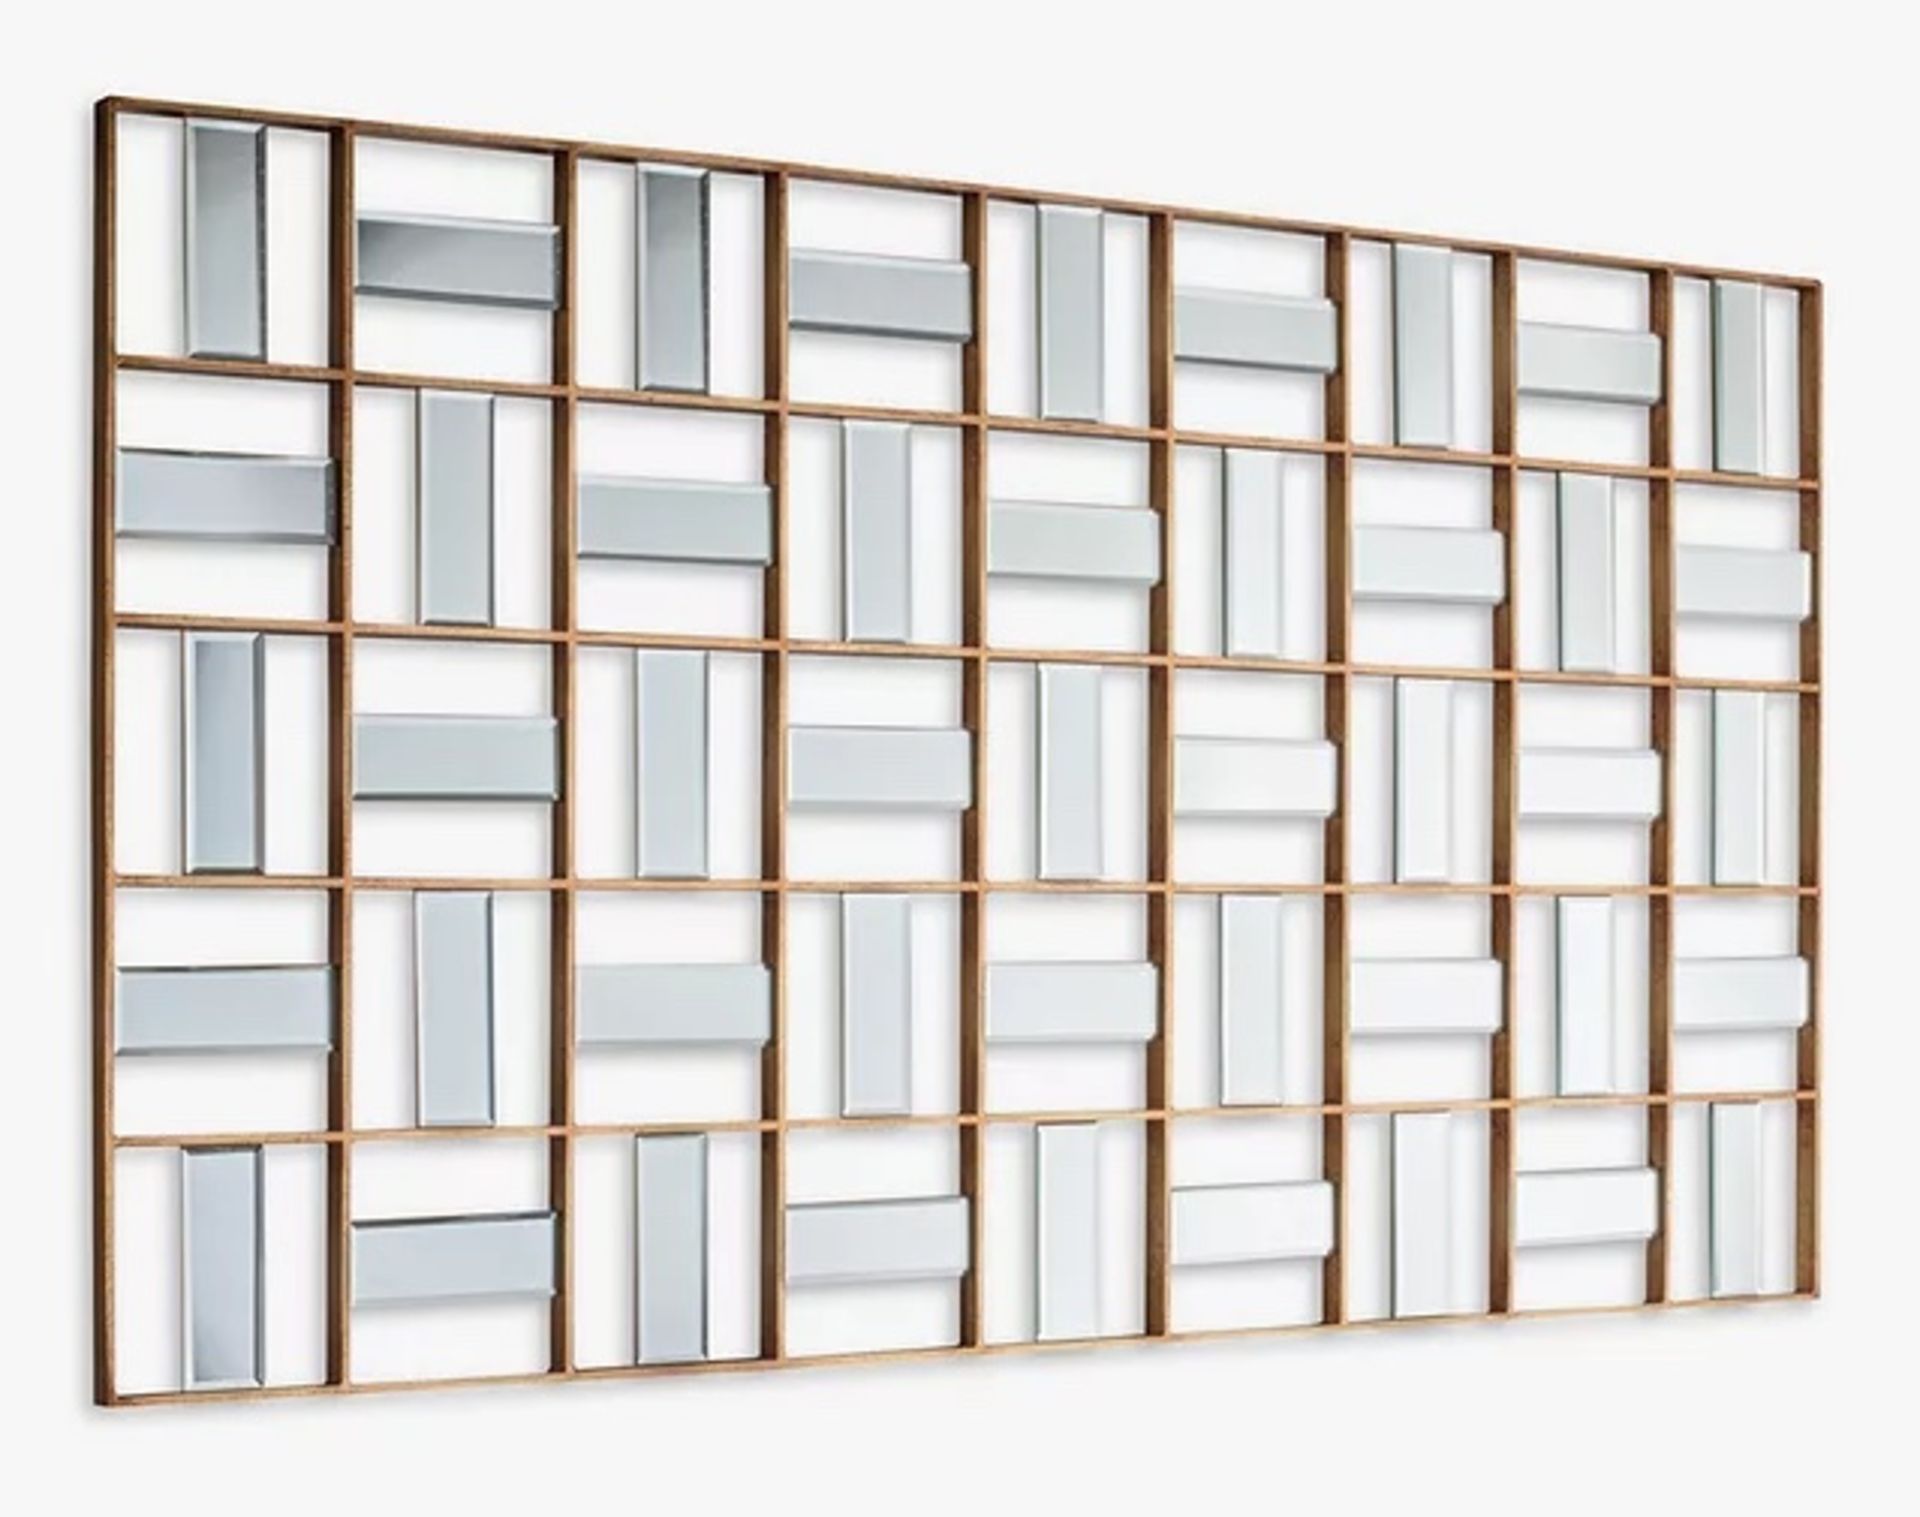 John Lewis Gallery Honeycomb Rectangular Wall Mirror, 132 x 73cm, Gold - PRICED £575 - Image 2 of 6